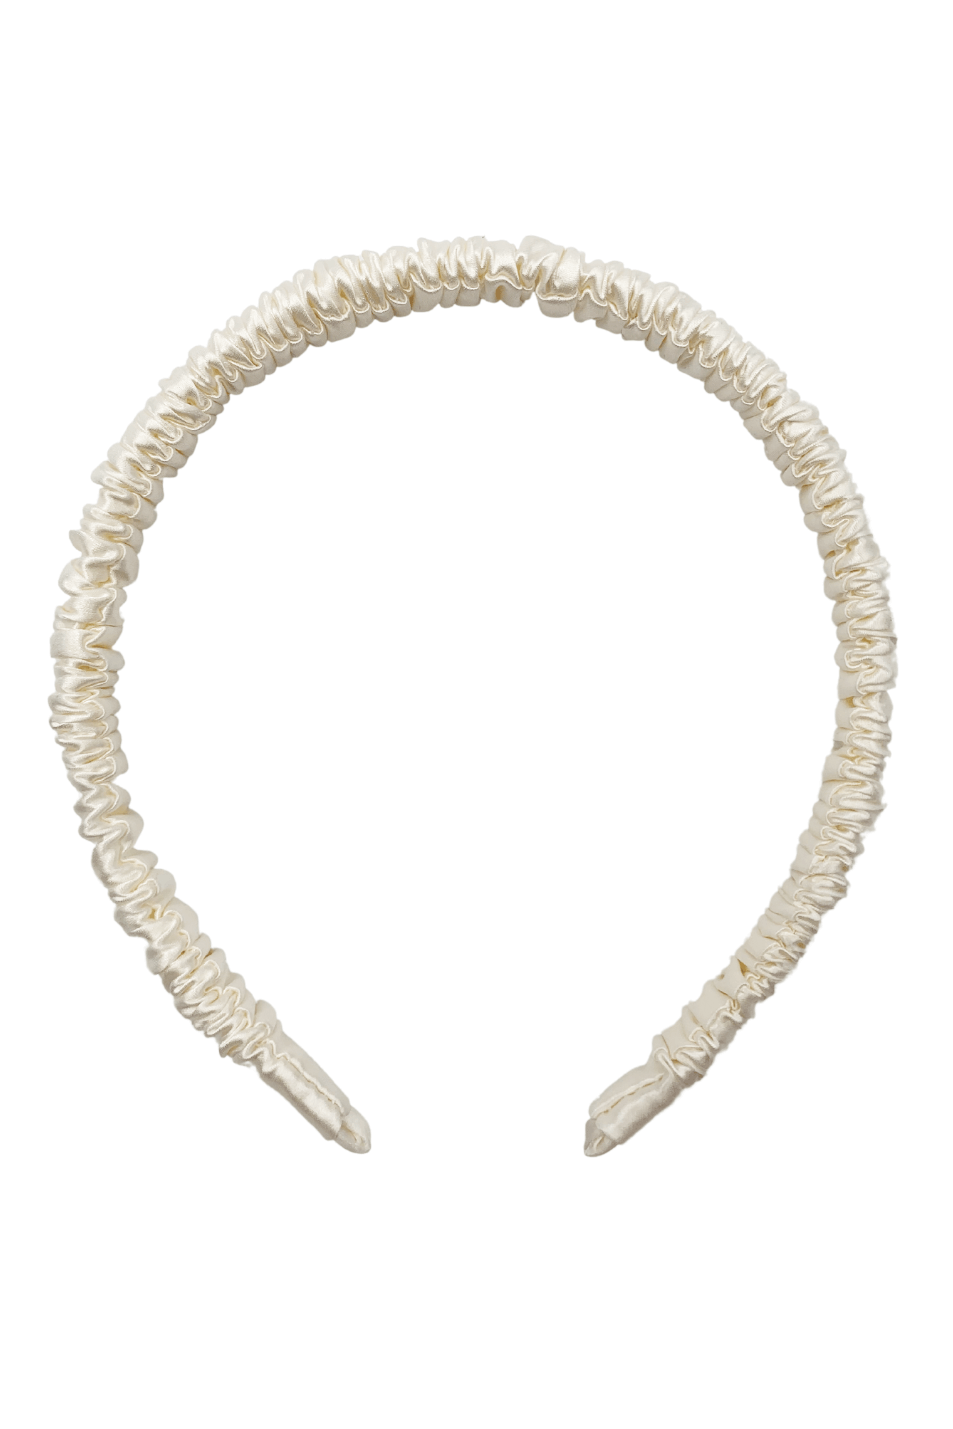 Silk Hairband (Thin) - Pearl White - BASK™